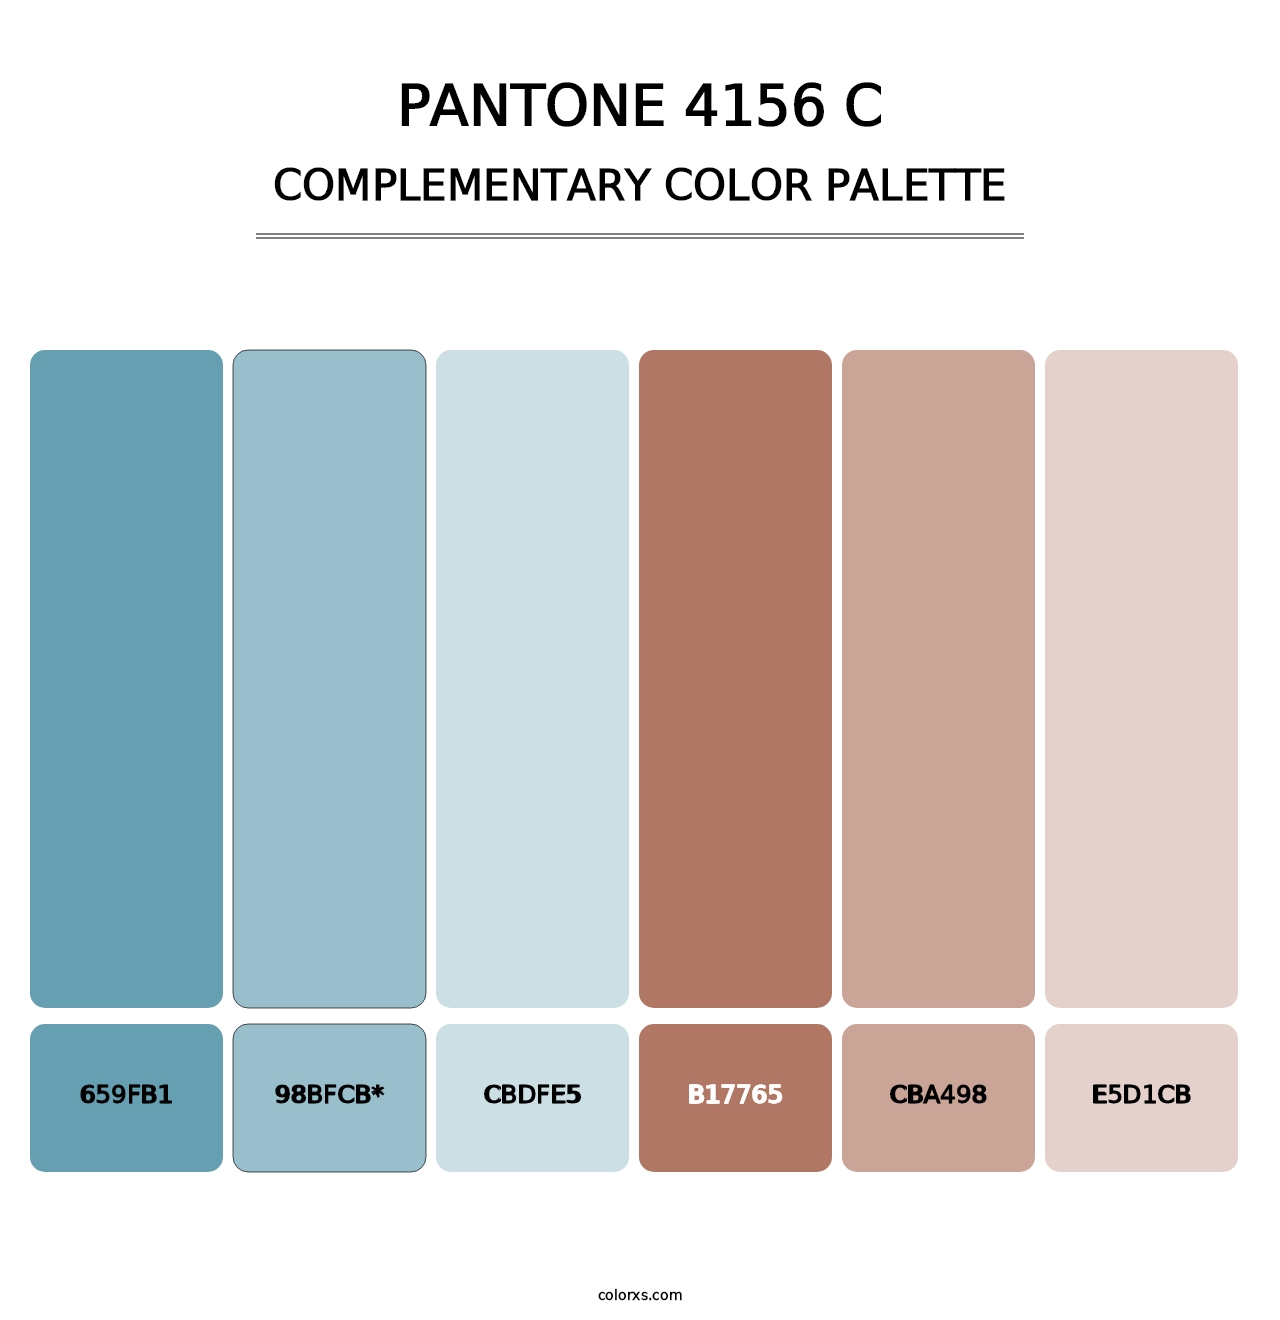 PANTONE 4156 C - Complementary Color Palette